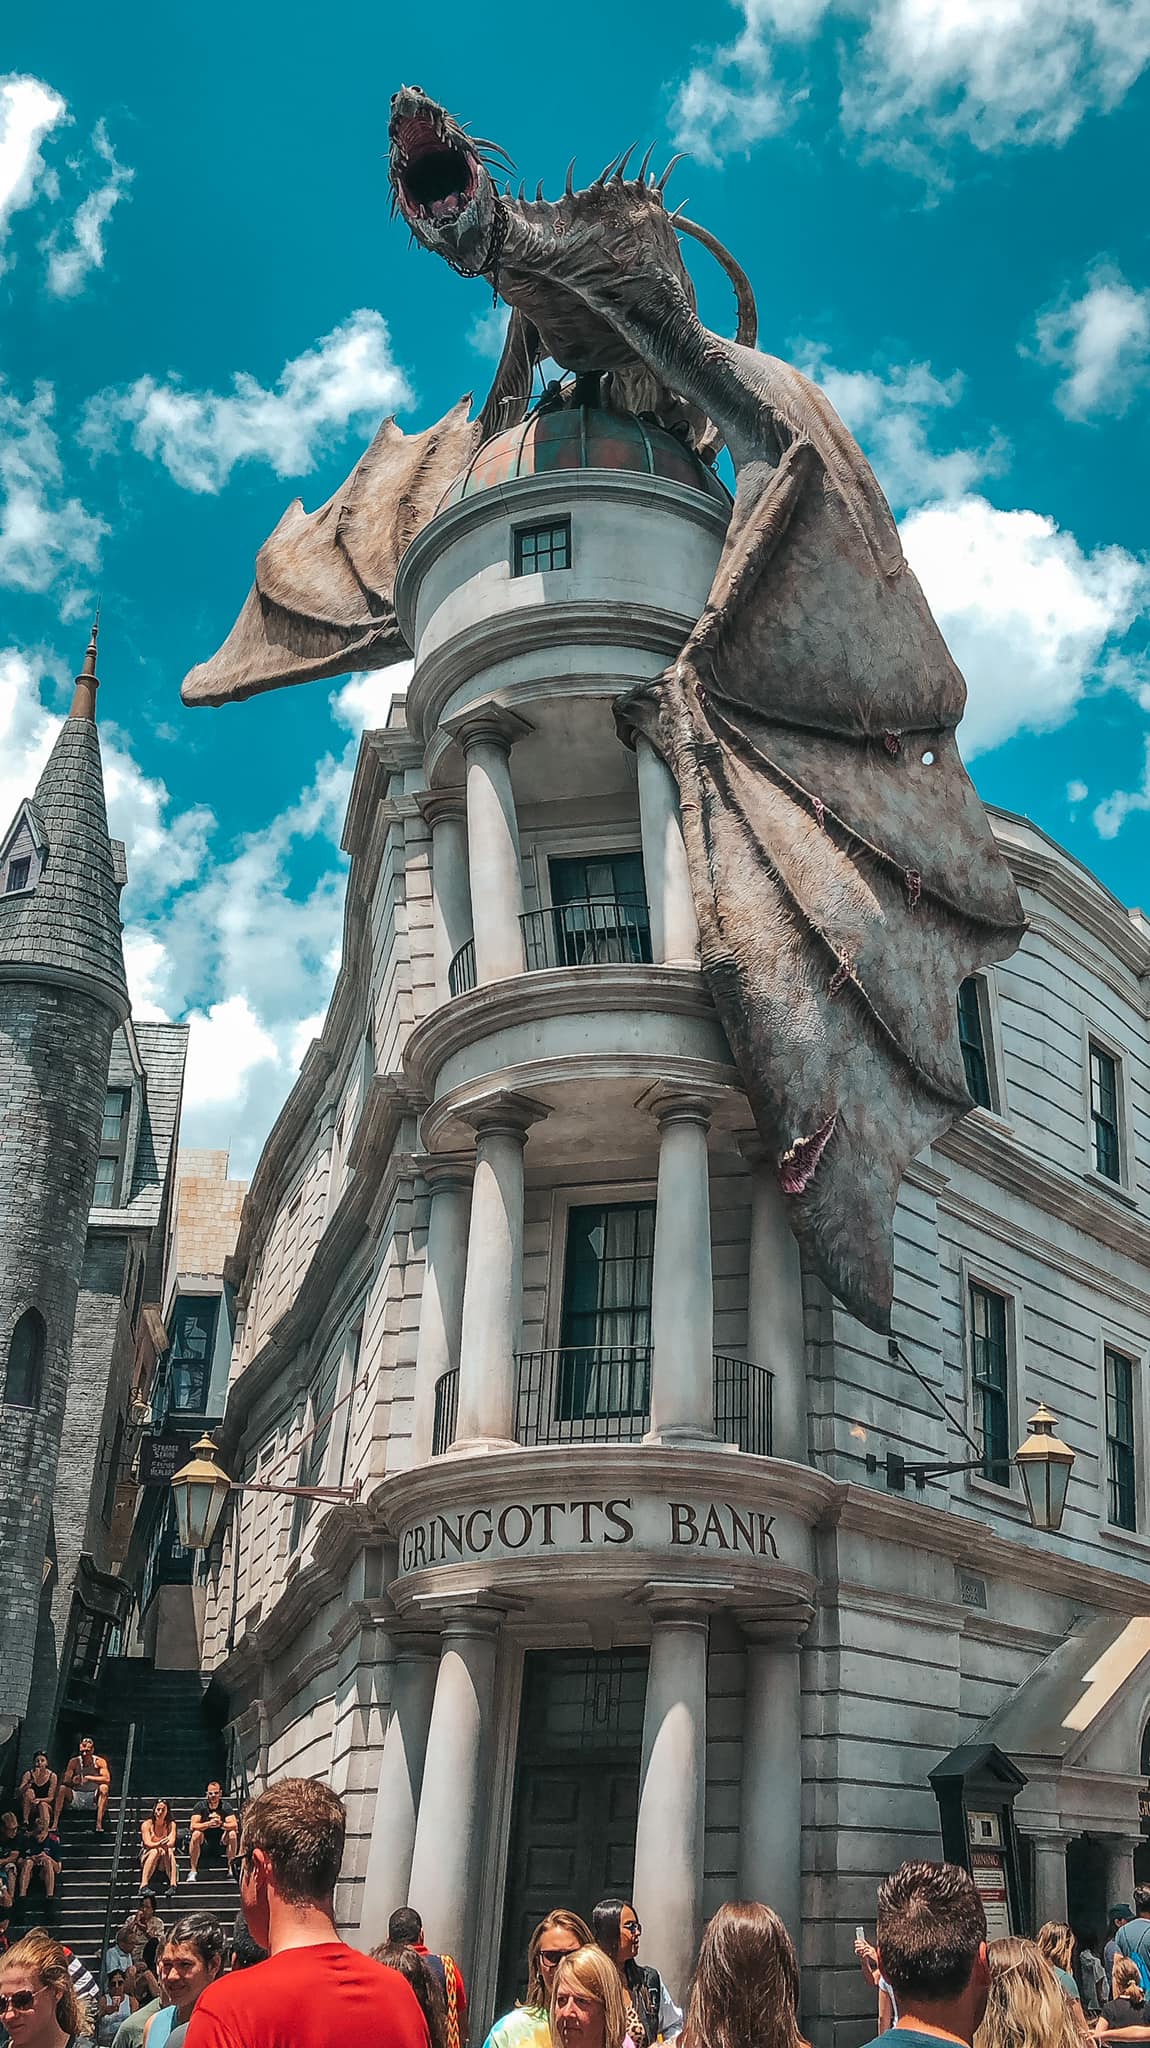 Gringotts Bank at Harry Potter World in Universal Orlando